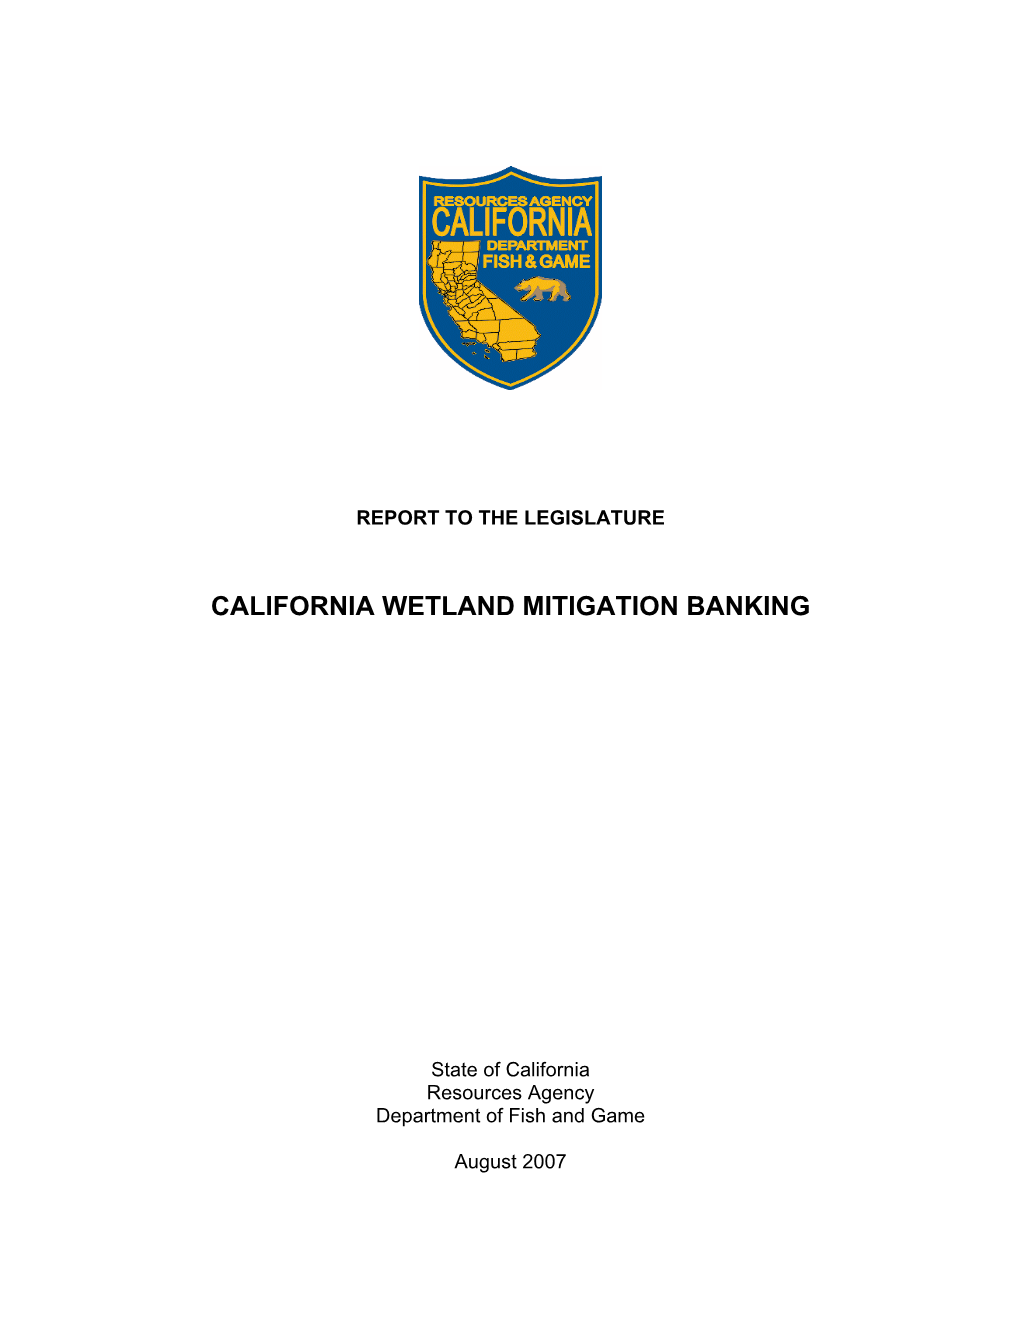 Report to the Legislature, CA Wetland Mitigation Banking